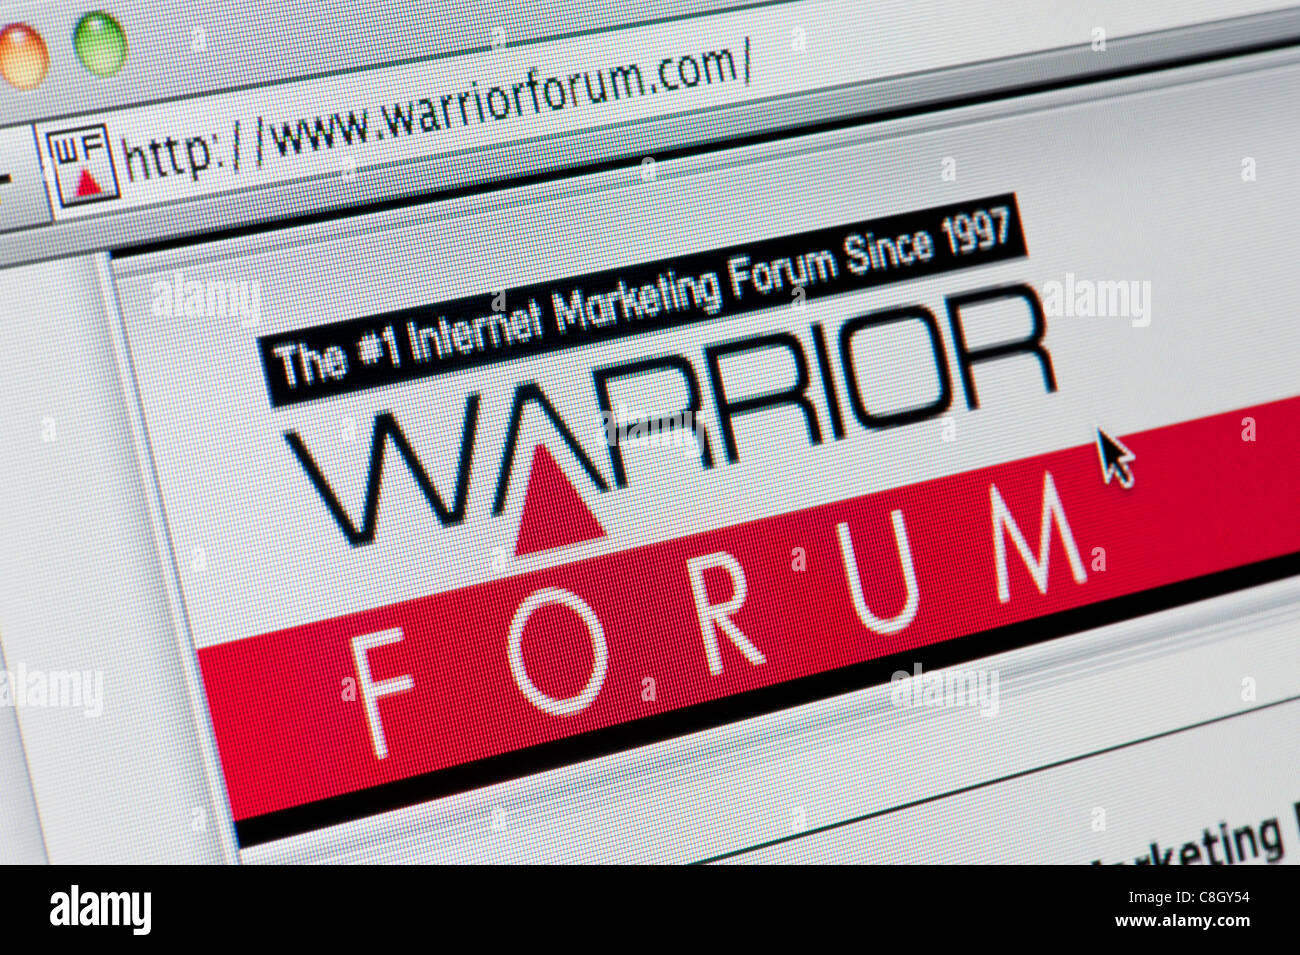 Miami 24/7 Locksmith - Warrior Forum